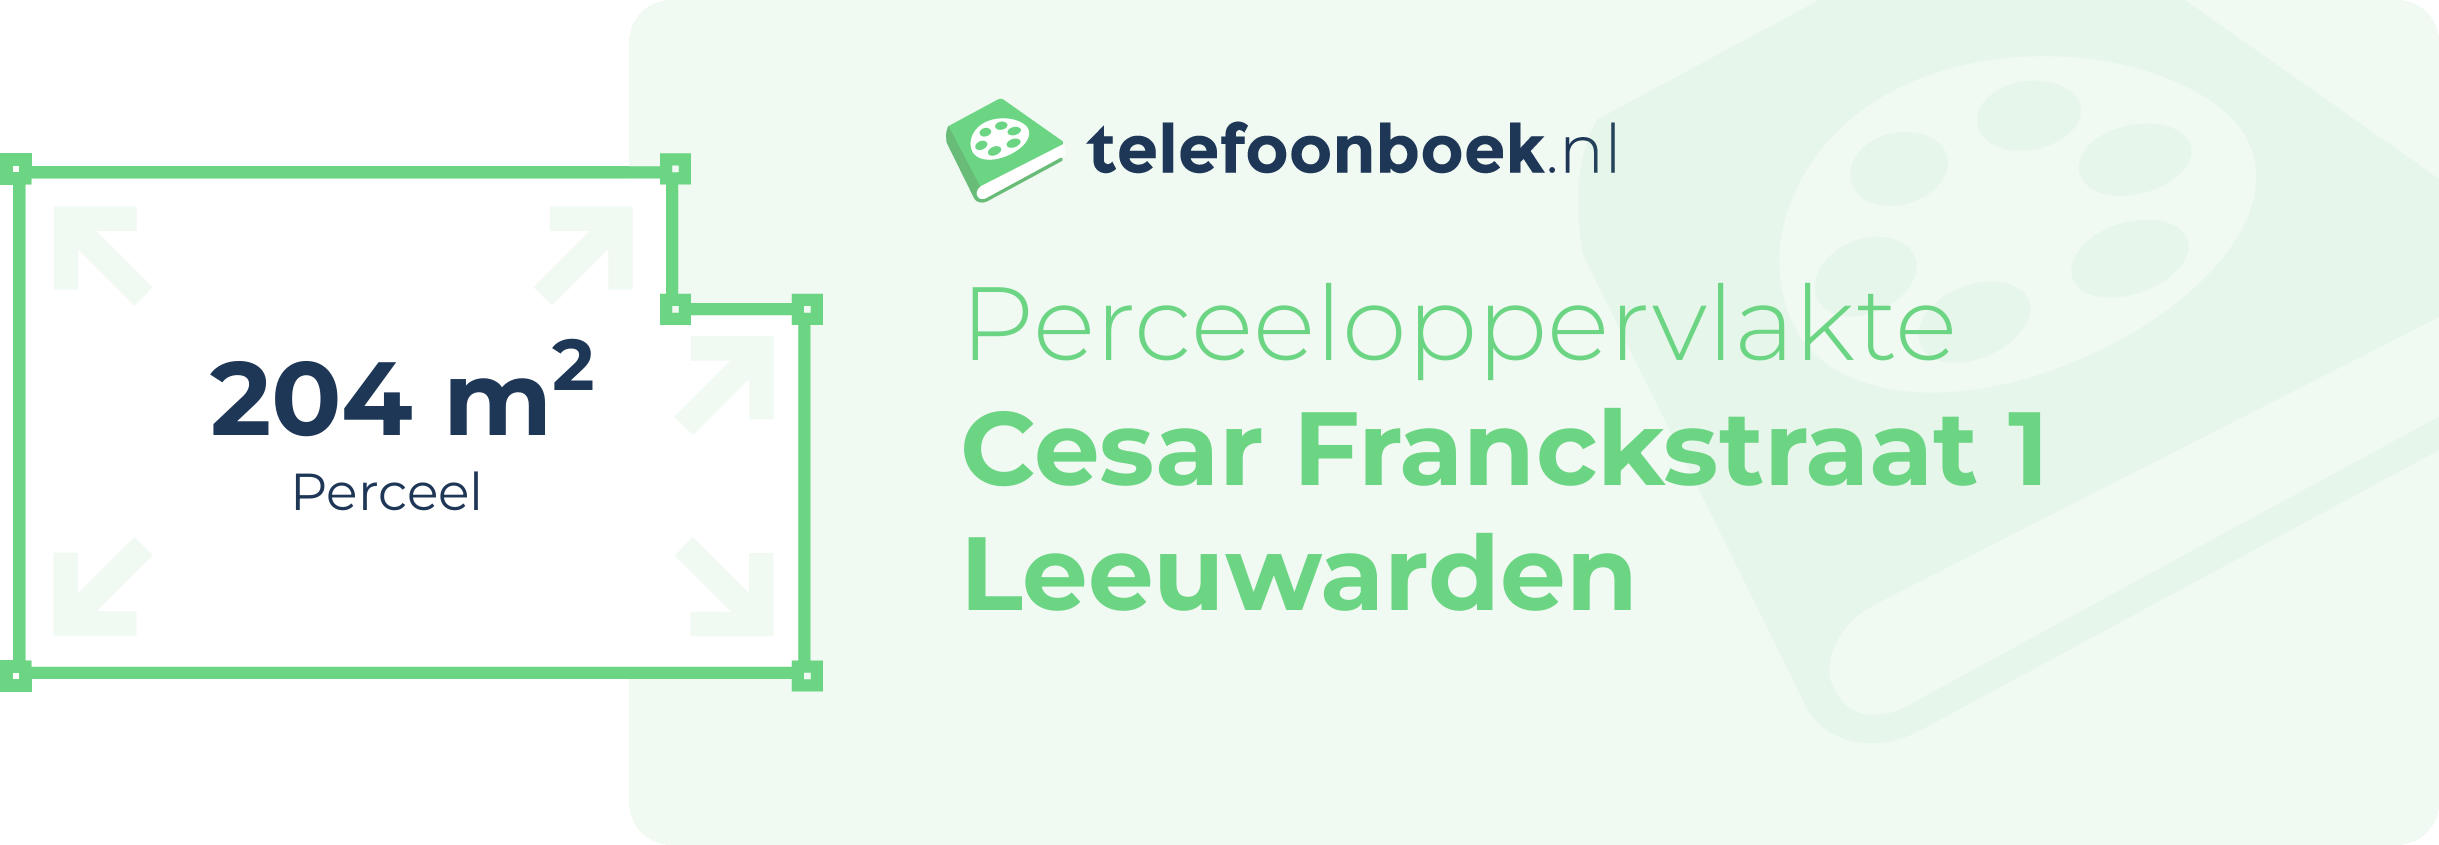 Perceeloppervlakte Cesar Franckstraat 1 Leeuwarden